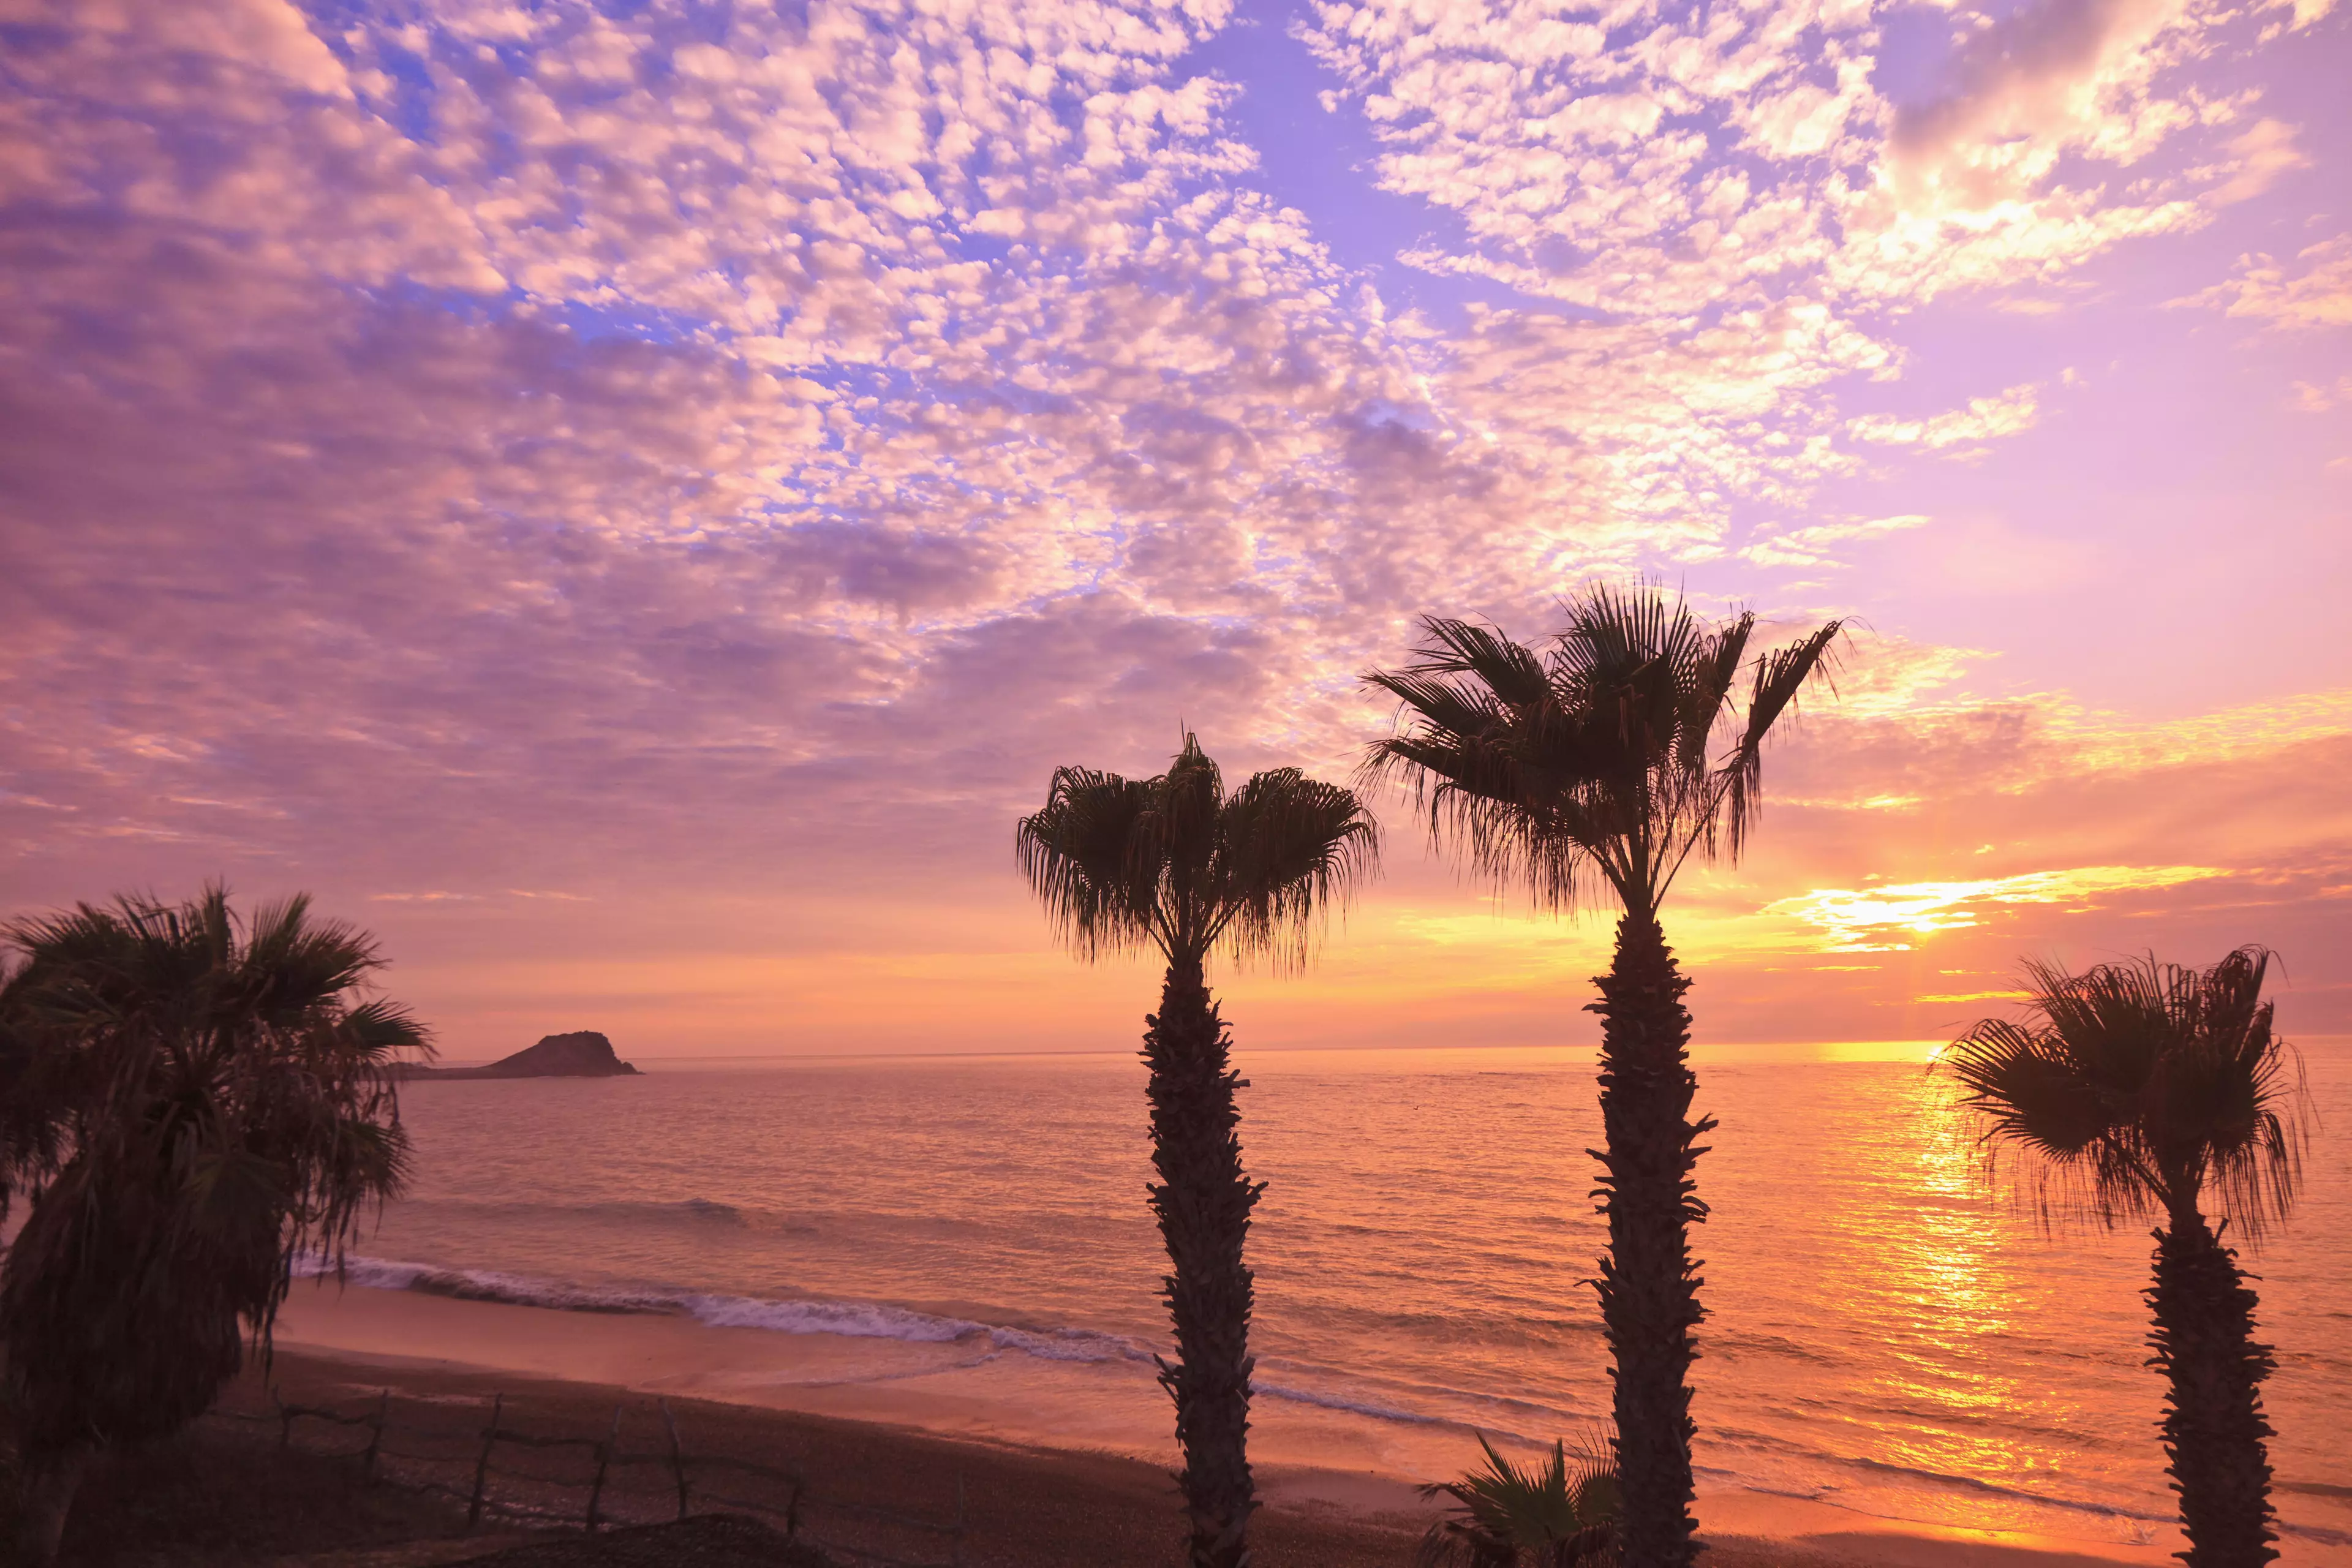 The vaquita called the Gulf of California home.